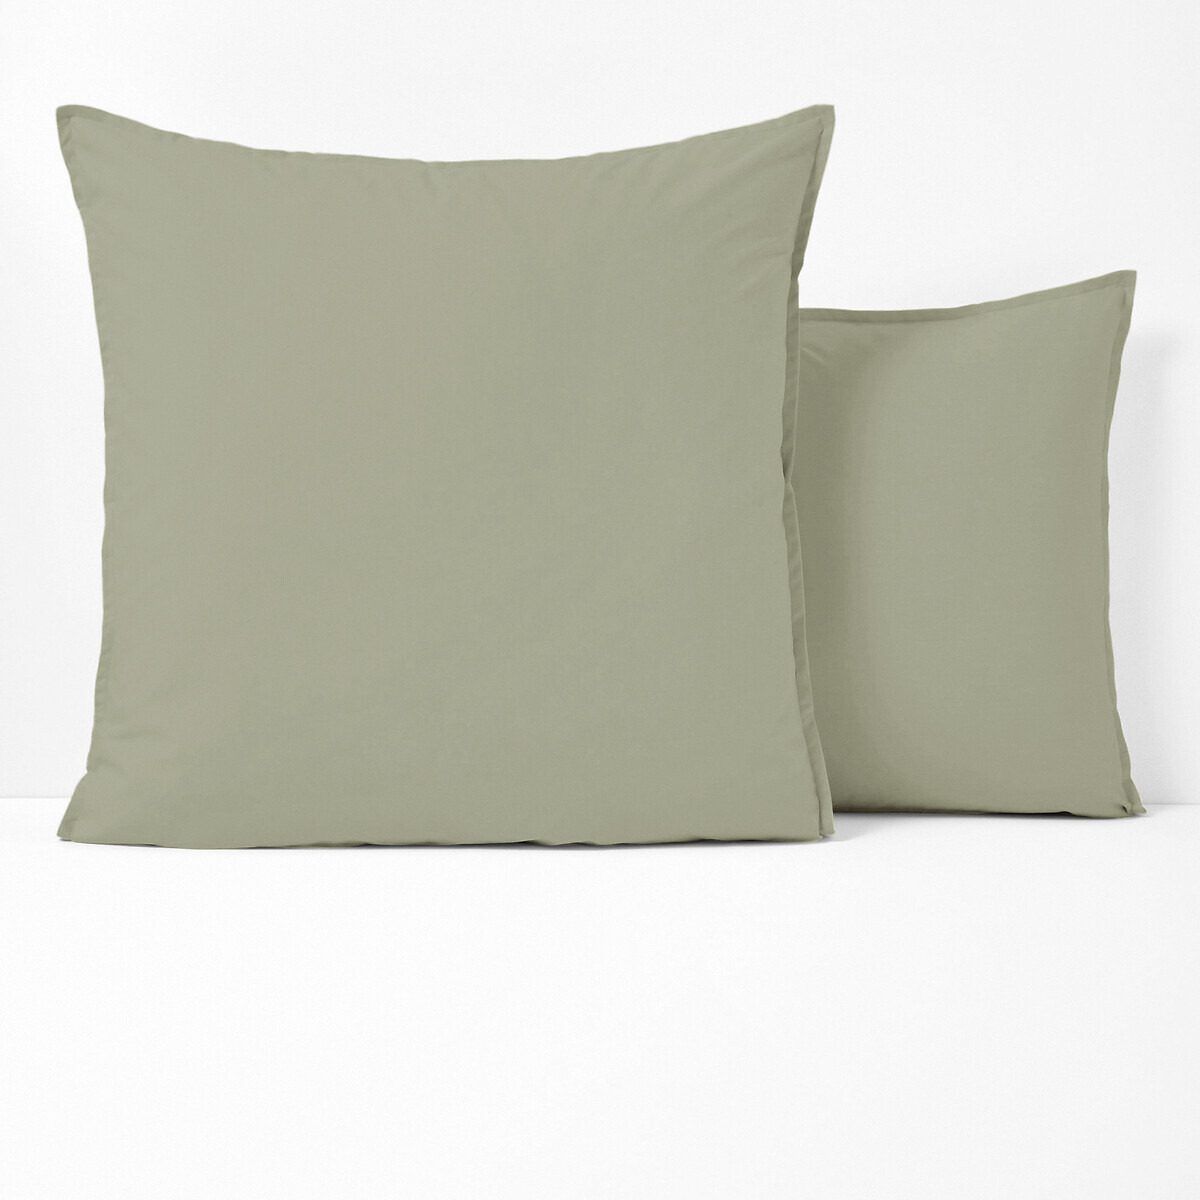 Pillowcase in Plain Organic Cotton Percale - image 1